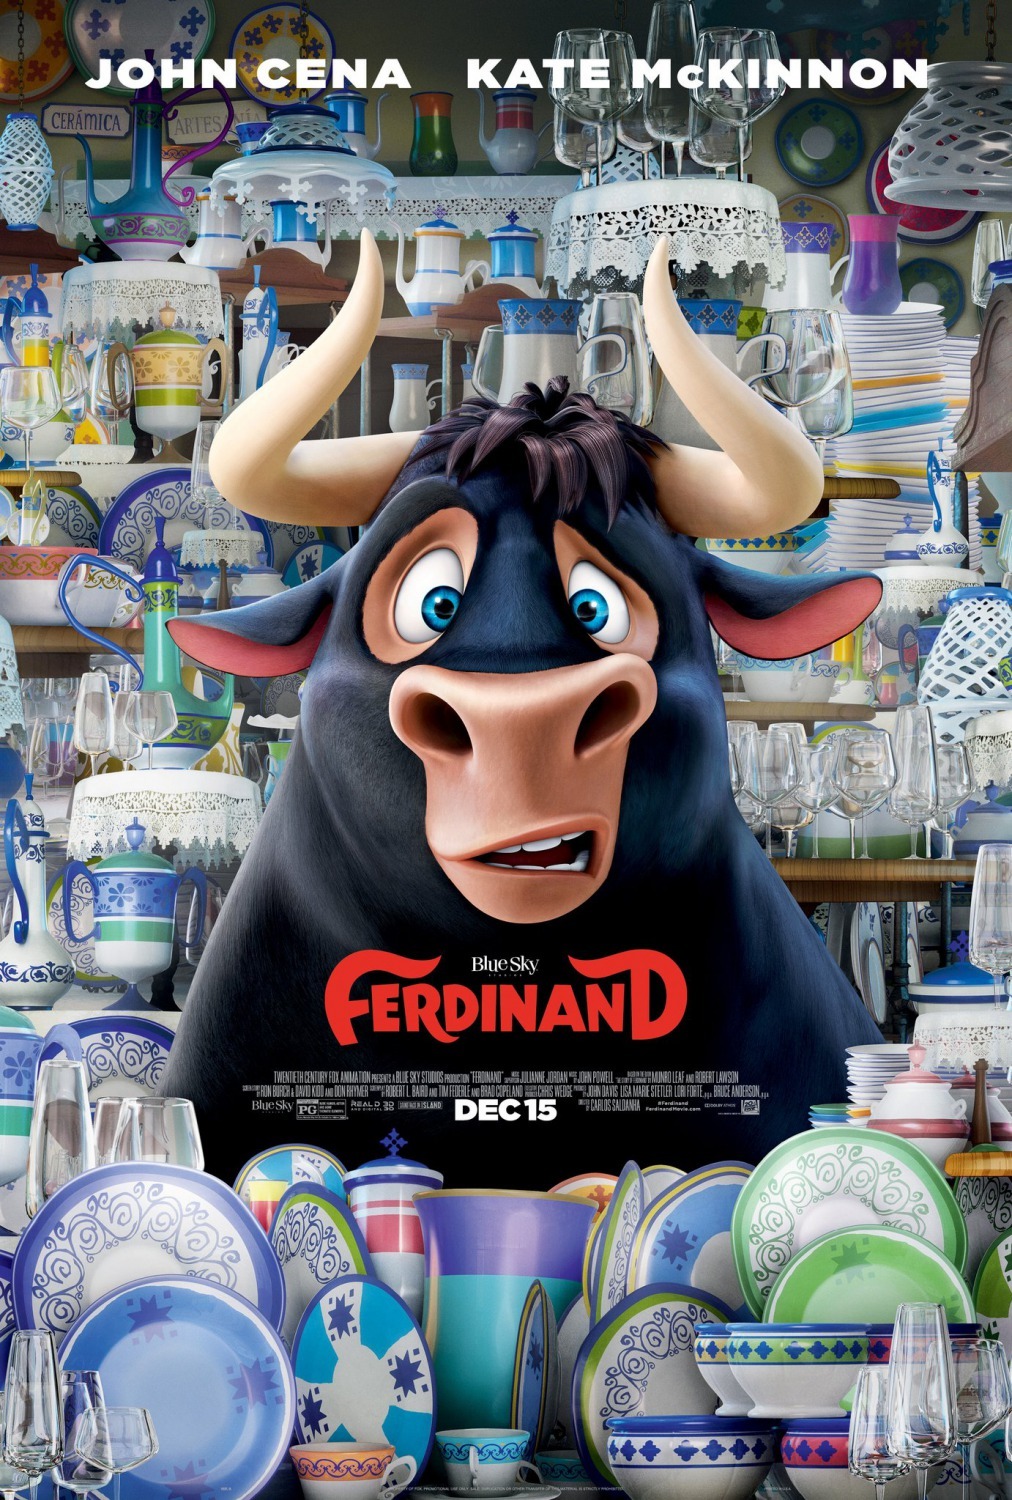 Nonton film Ferdinand layarkaca21 indoxx1 ganool online streaming terbaru